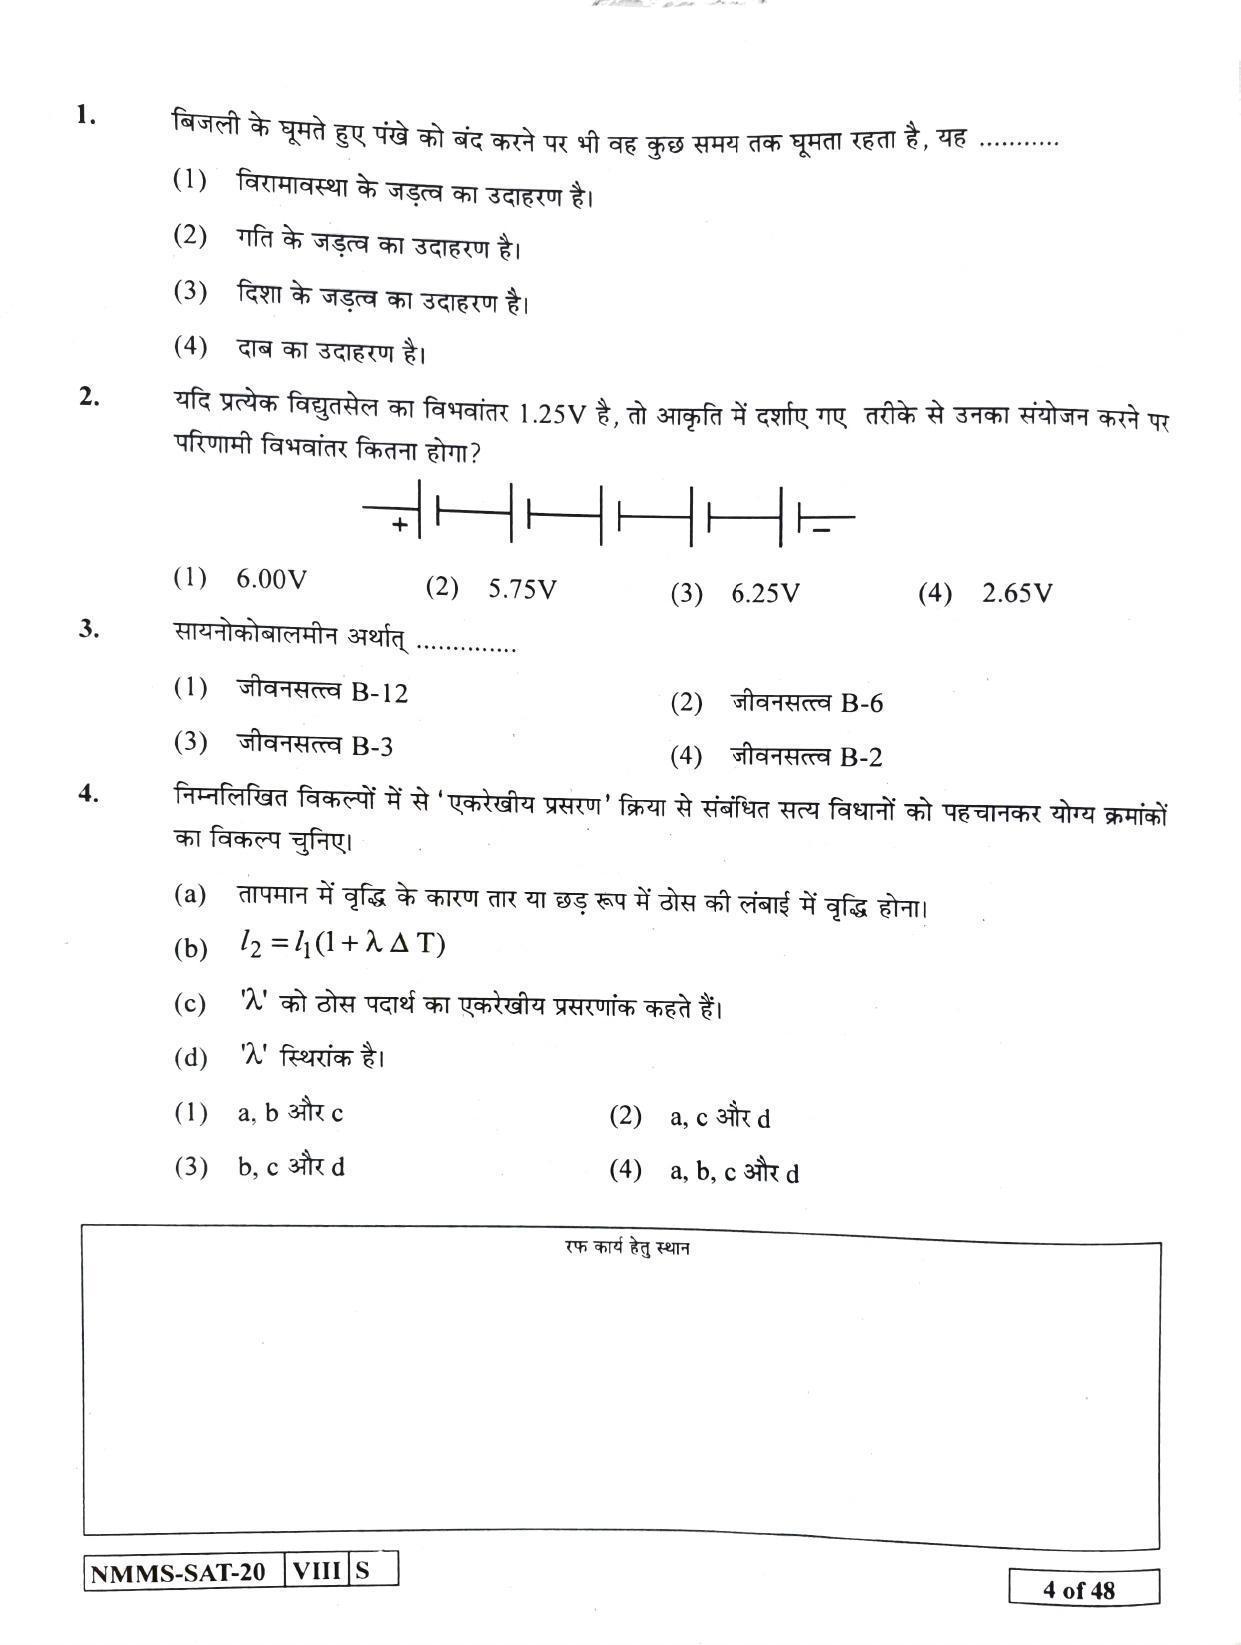 SAT HINDI 2020-21 Class 8 Maharashtra NMMS Question Papers - Page 4